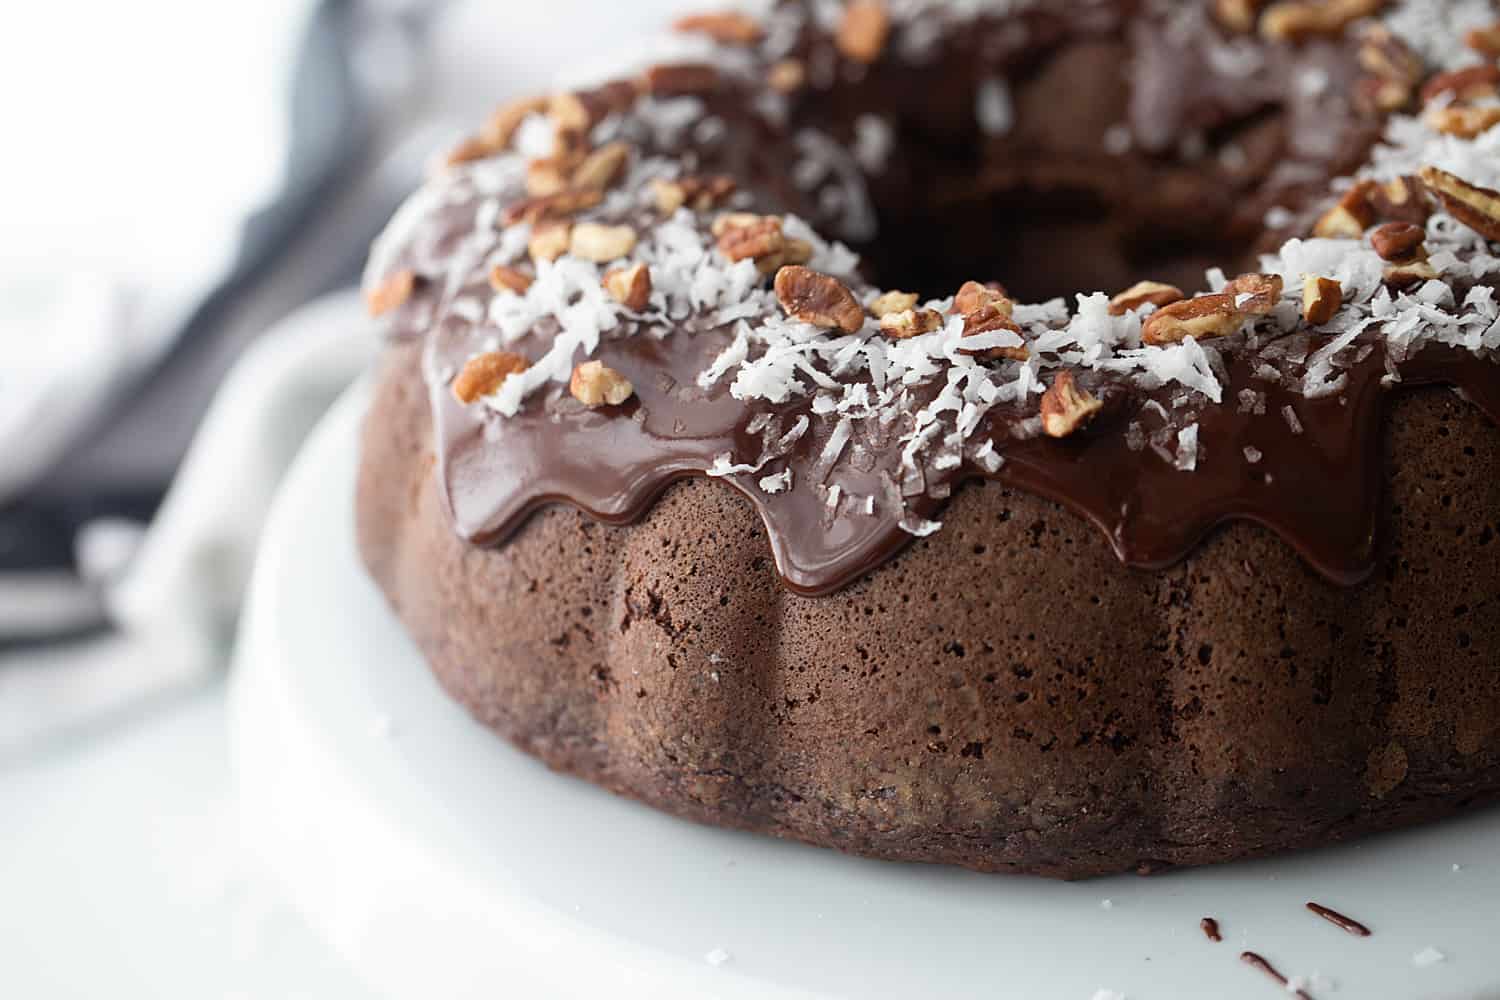 Triple Chocolate Bundt Cake - Try this triple chocolate bundt cake and you'll never bake plain ol' chocolate cake again. Rich, chocolaty, moist, and super easy. #halfscratched #bundt #bundtcake #chocolate #chocolatecake #baking #easydessert #easyrecipe #cake #cakerecipe